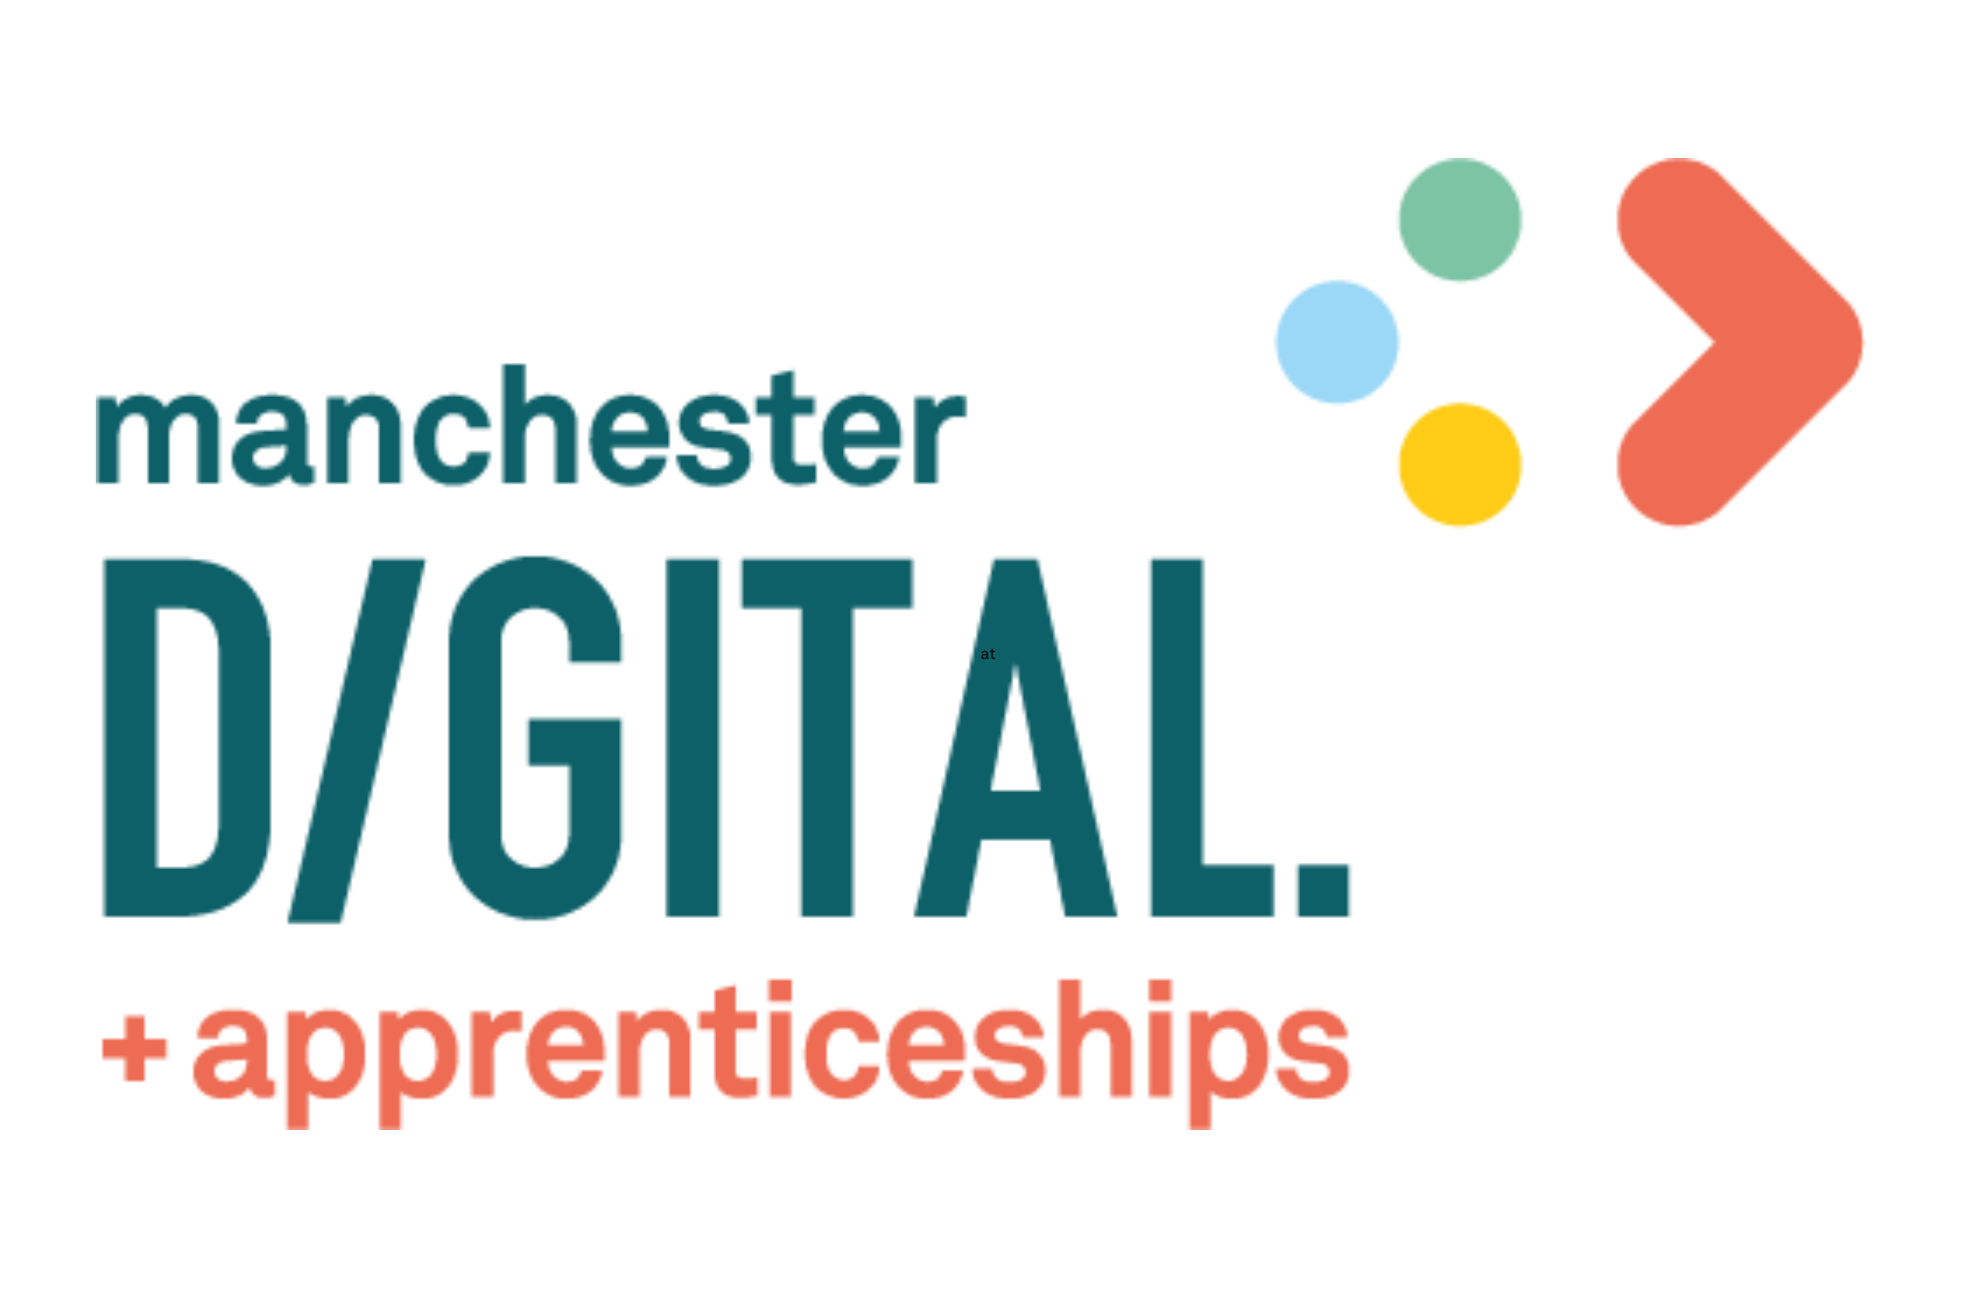 Manchester Digital apprenticeships